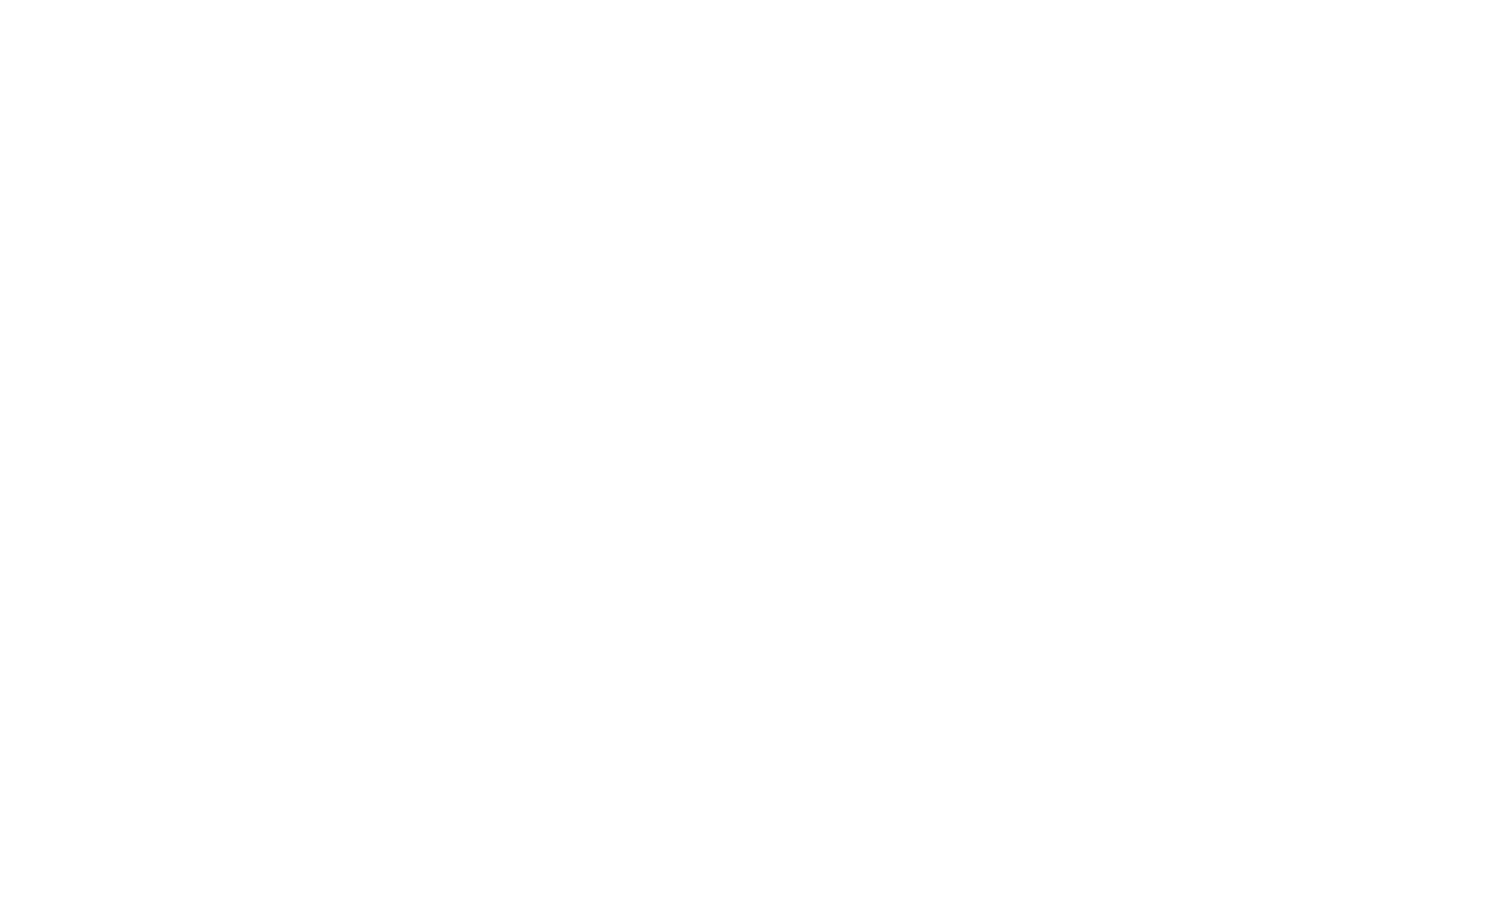 REPUBLIC OF STORY